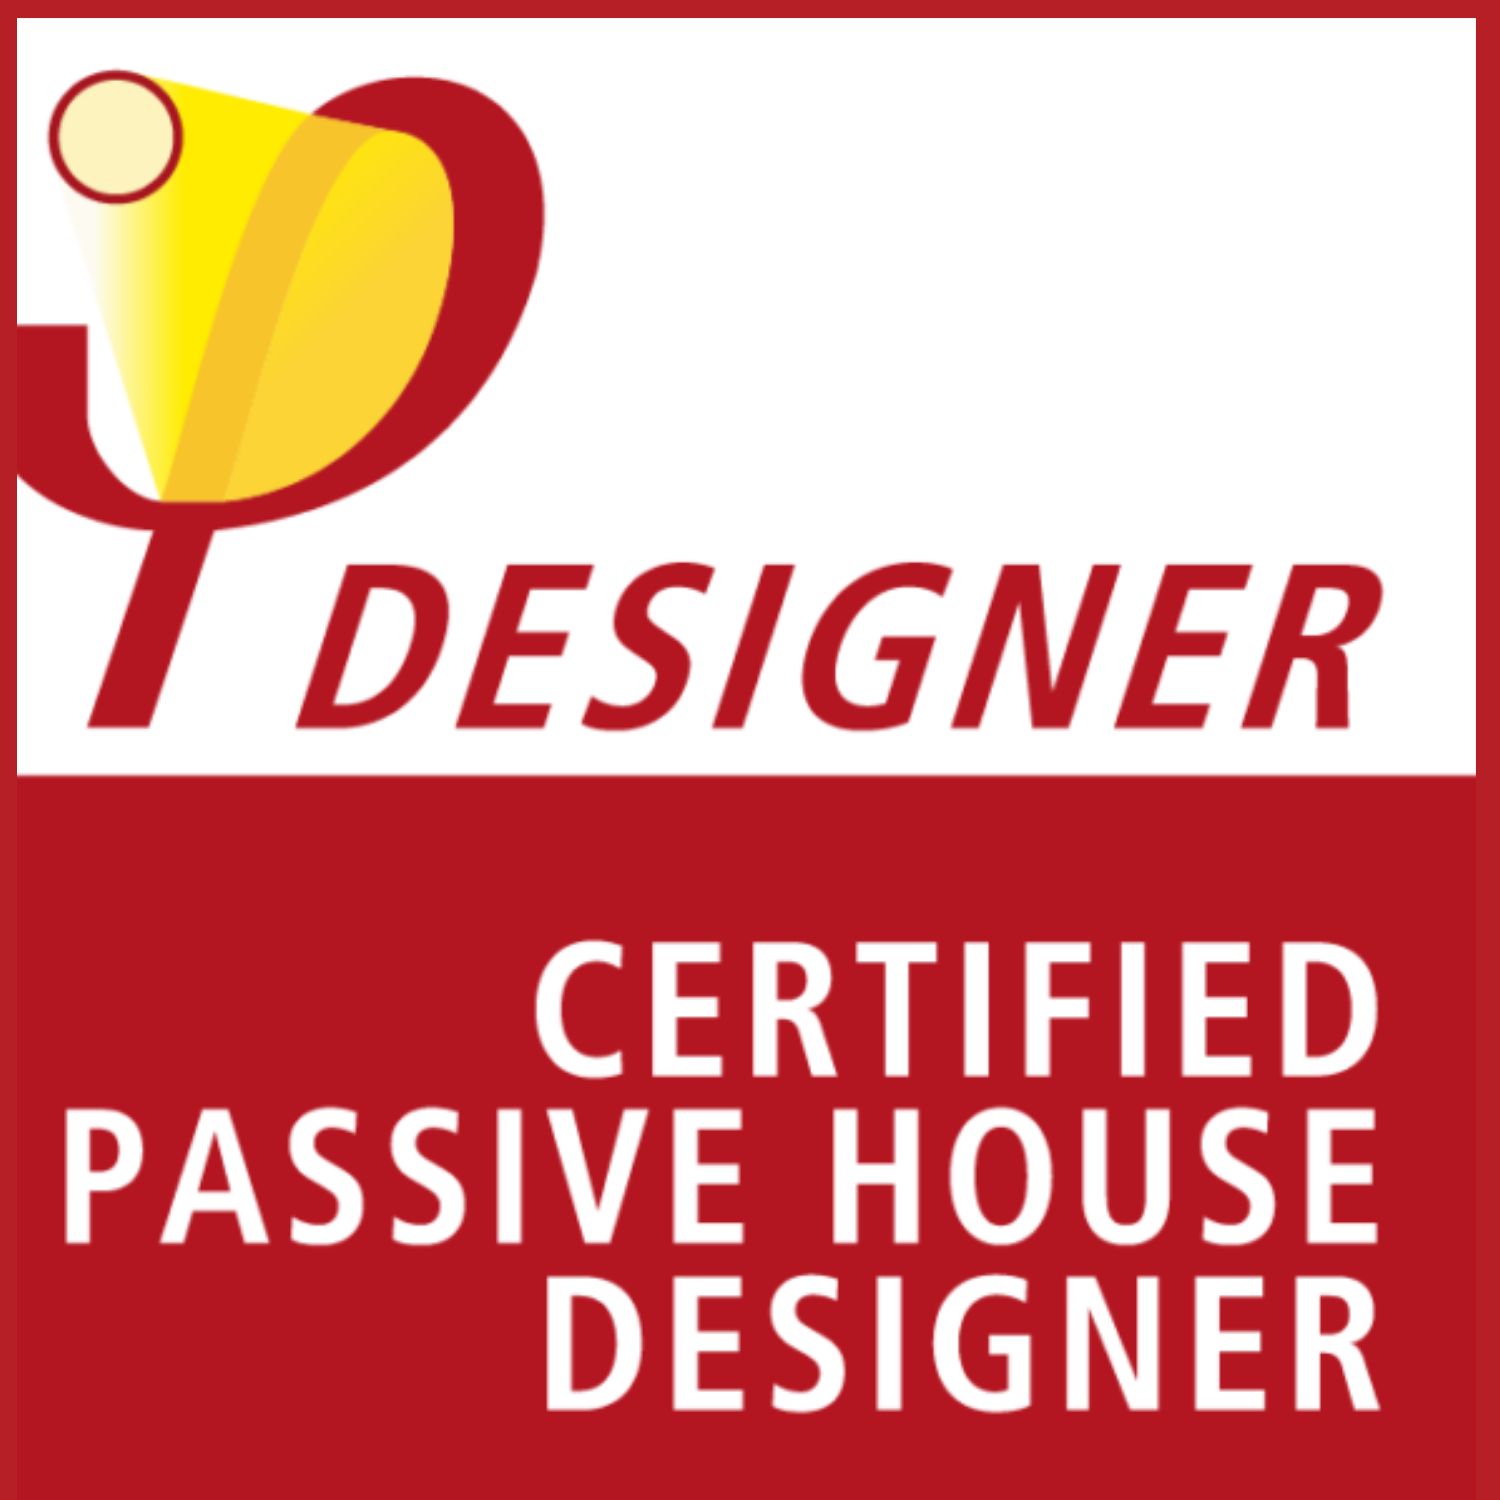 Passive House Institute Certifier